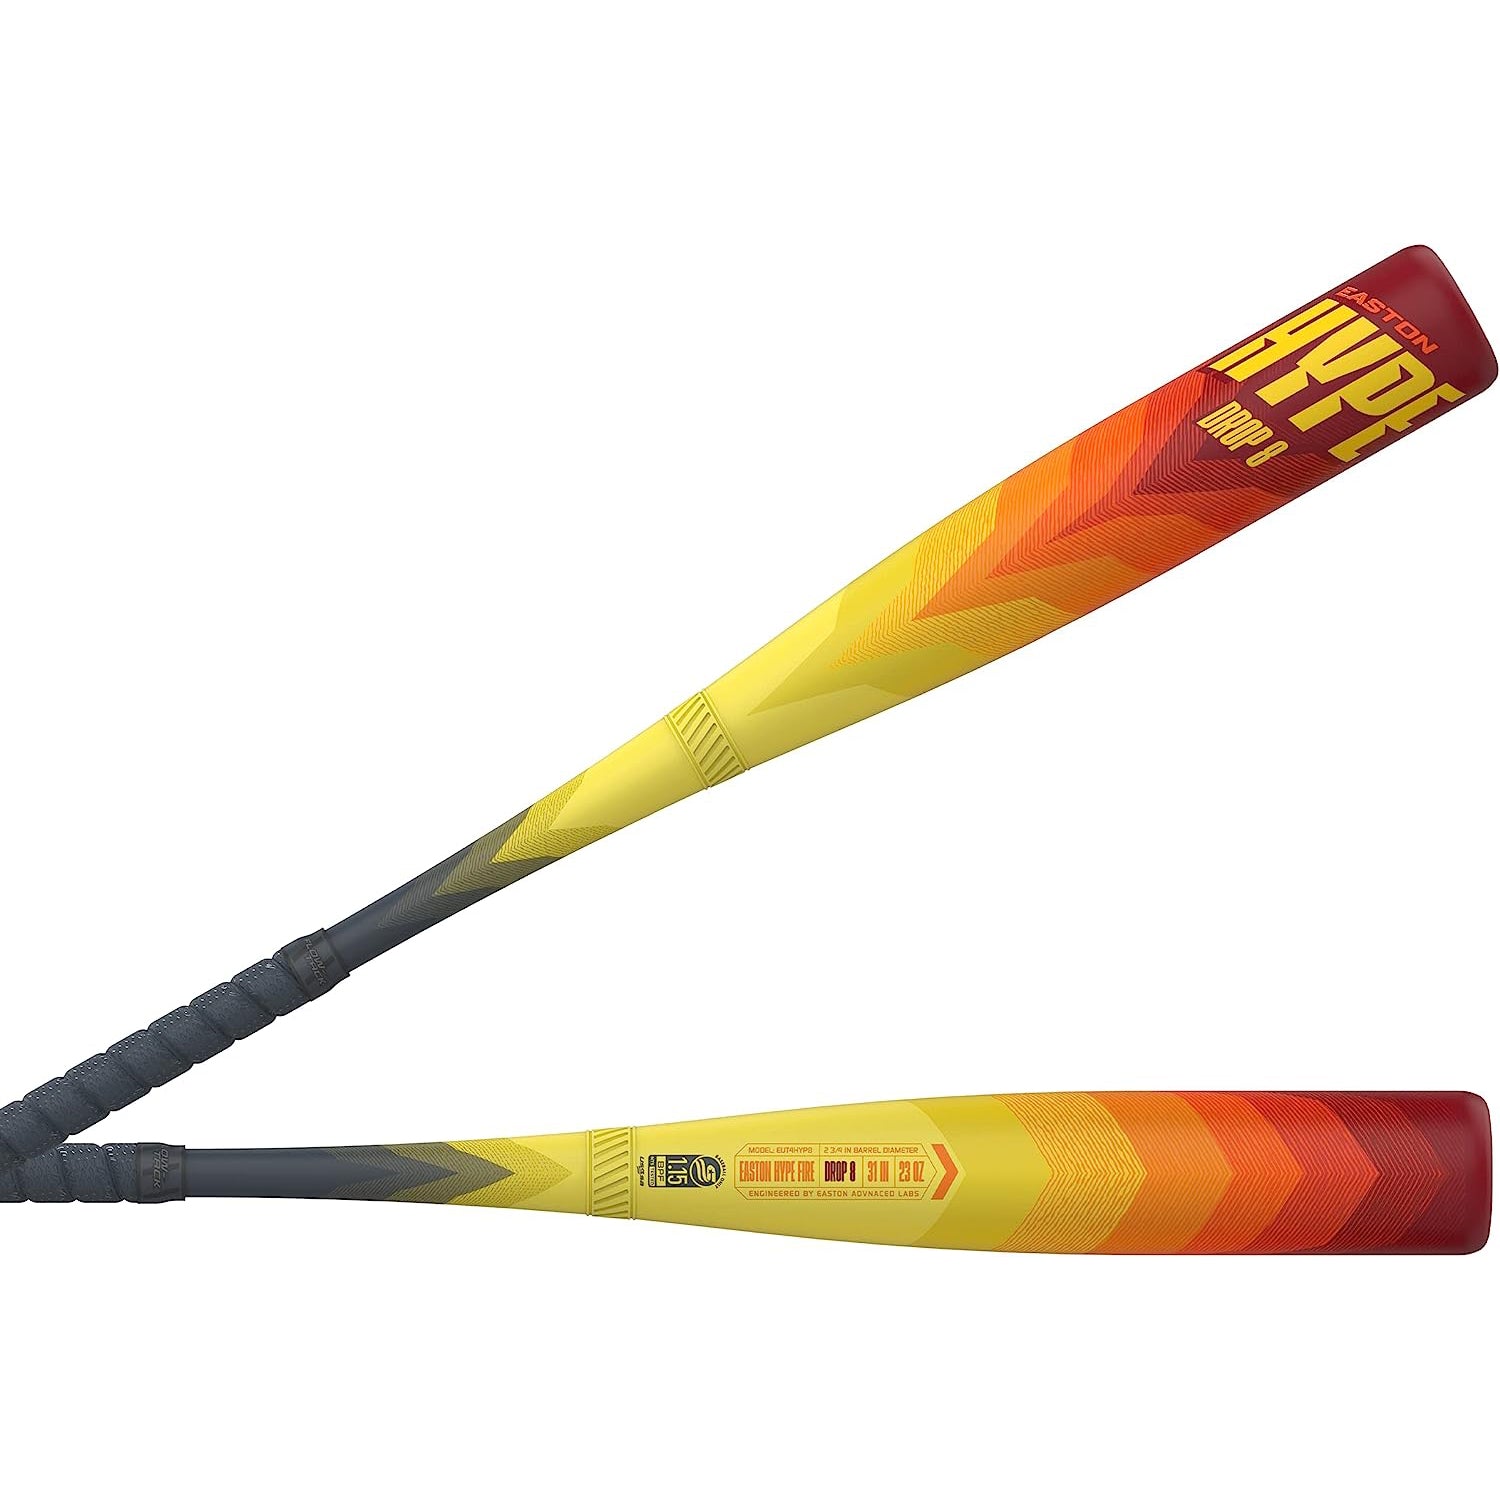 Easton Hype Fire -8 (2 3/4 inch Barrel) Usssa Youth Baseball Bat